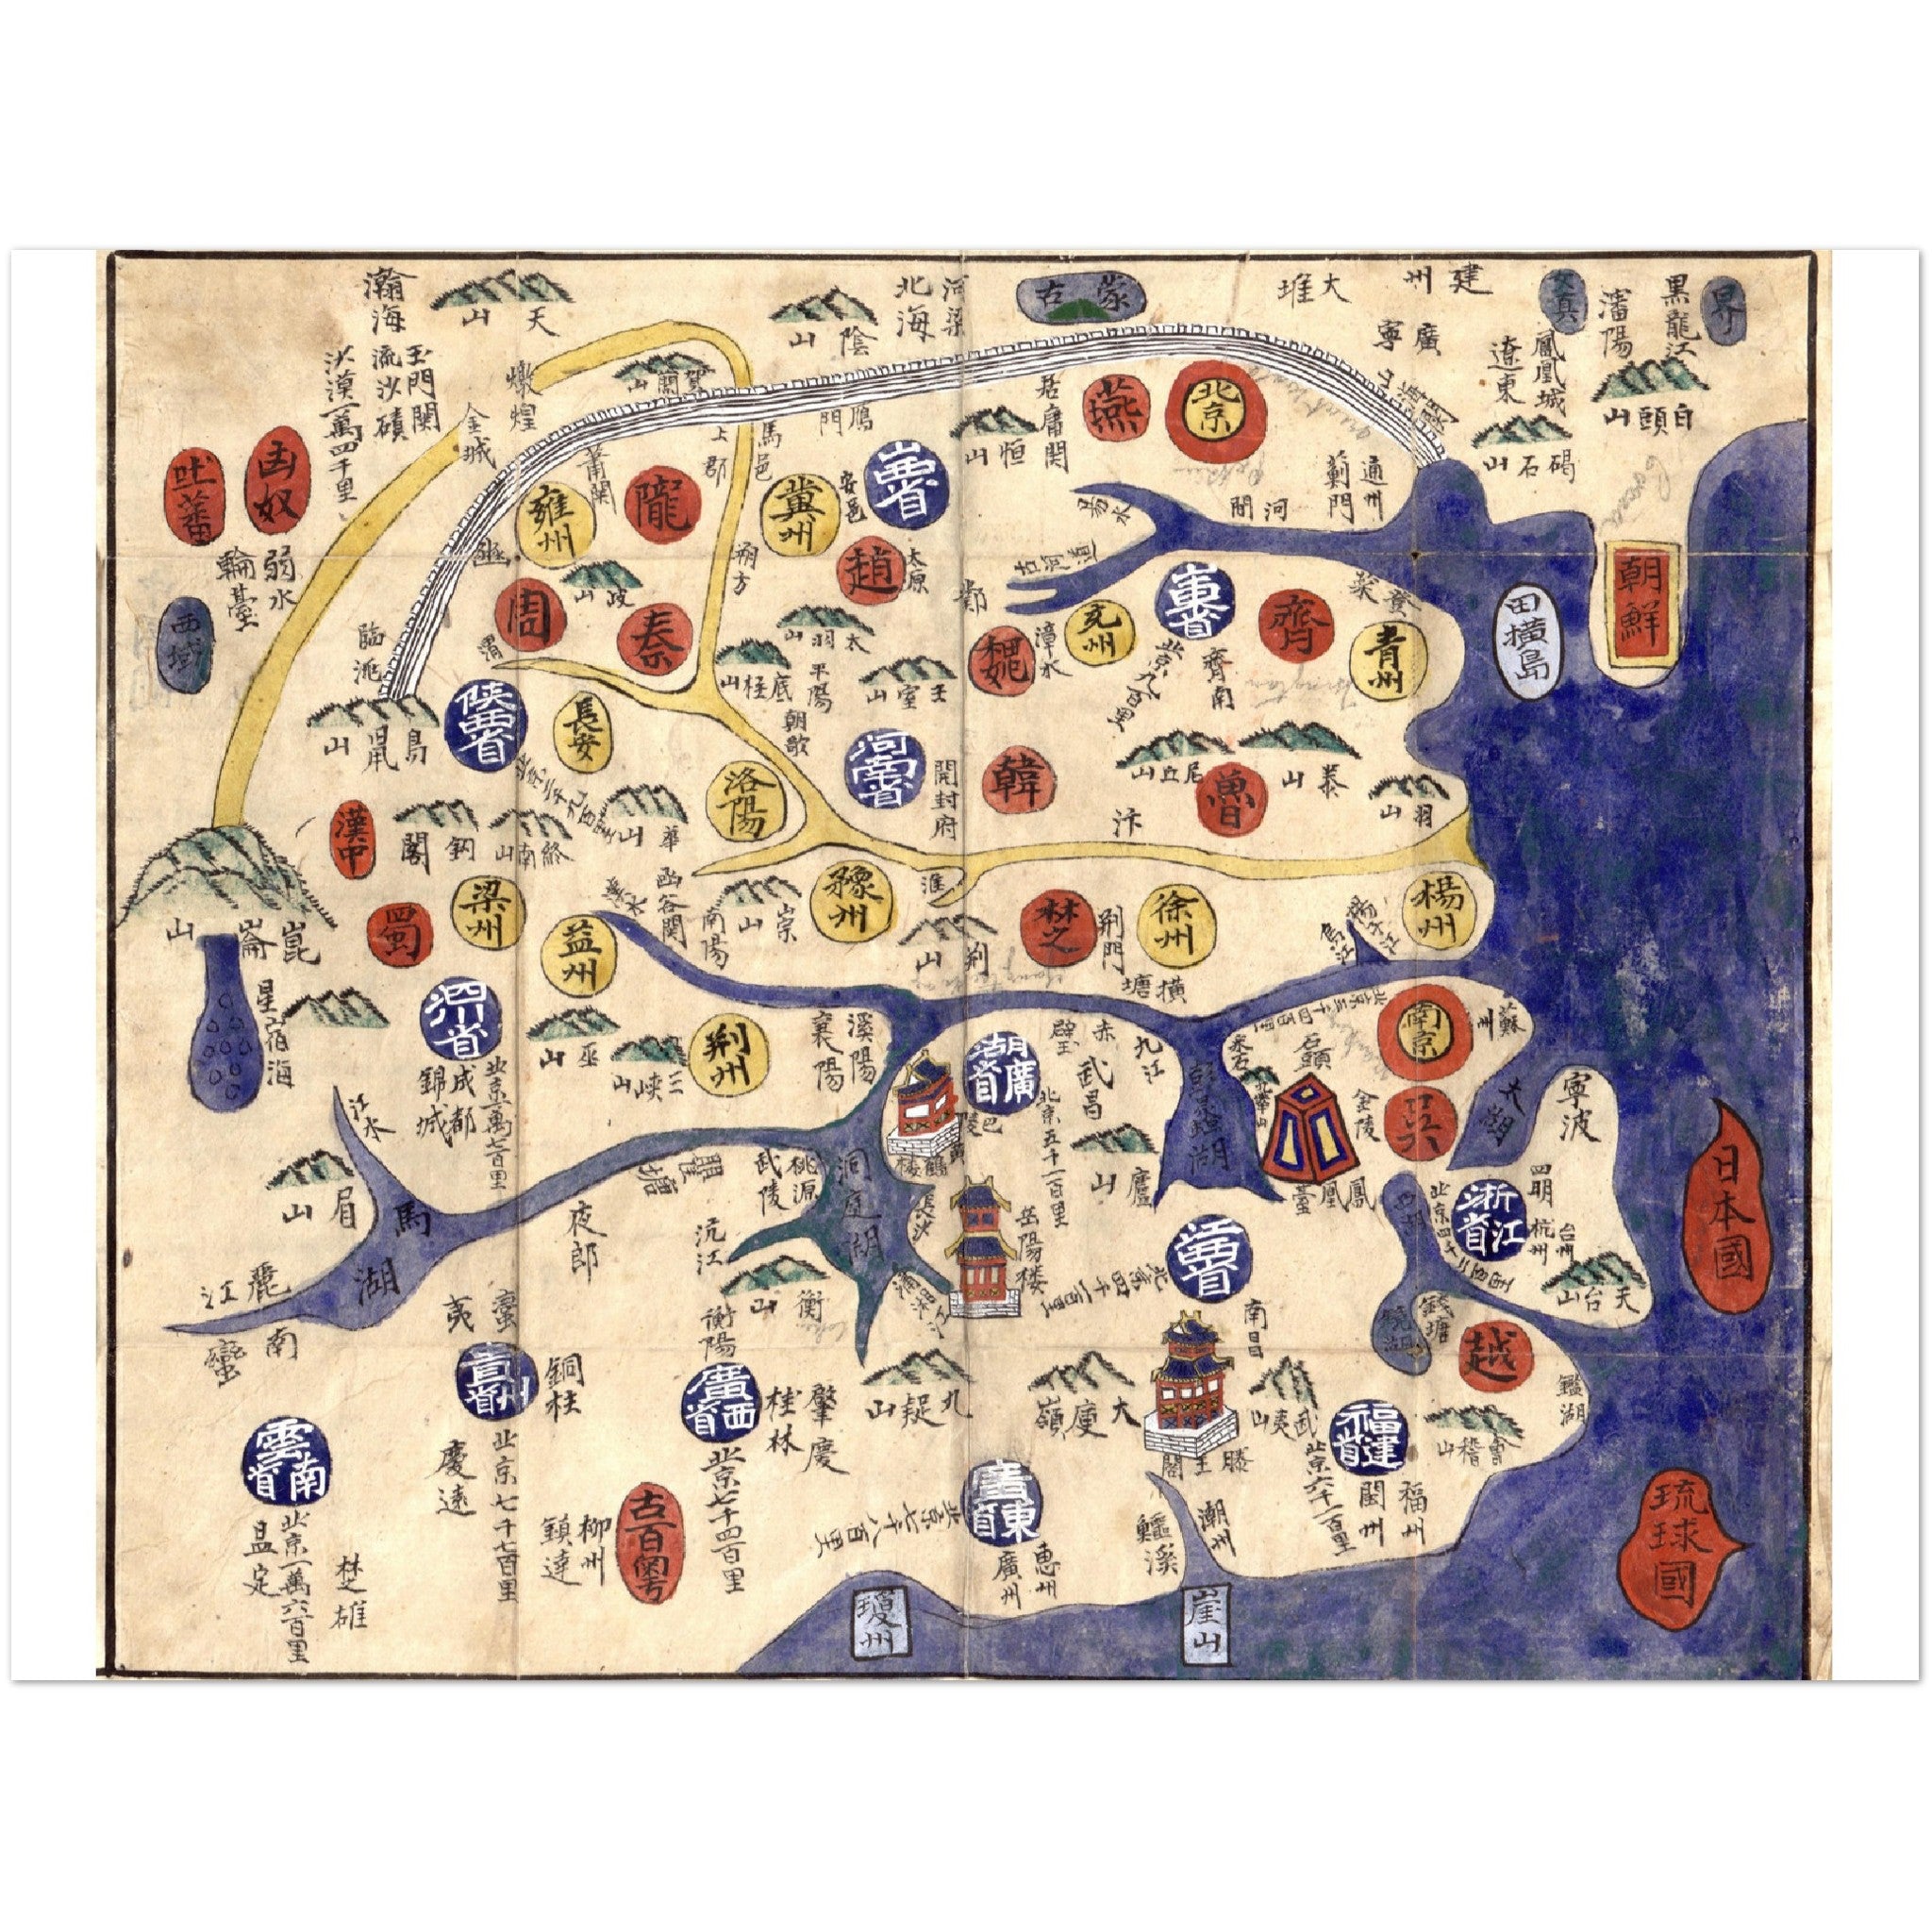 4471747 Tae Choson chido. Joseon era map of Korea, c1875